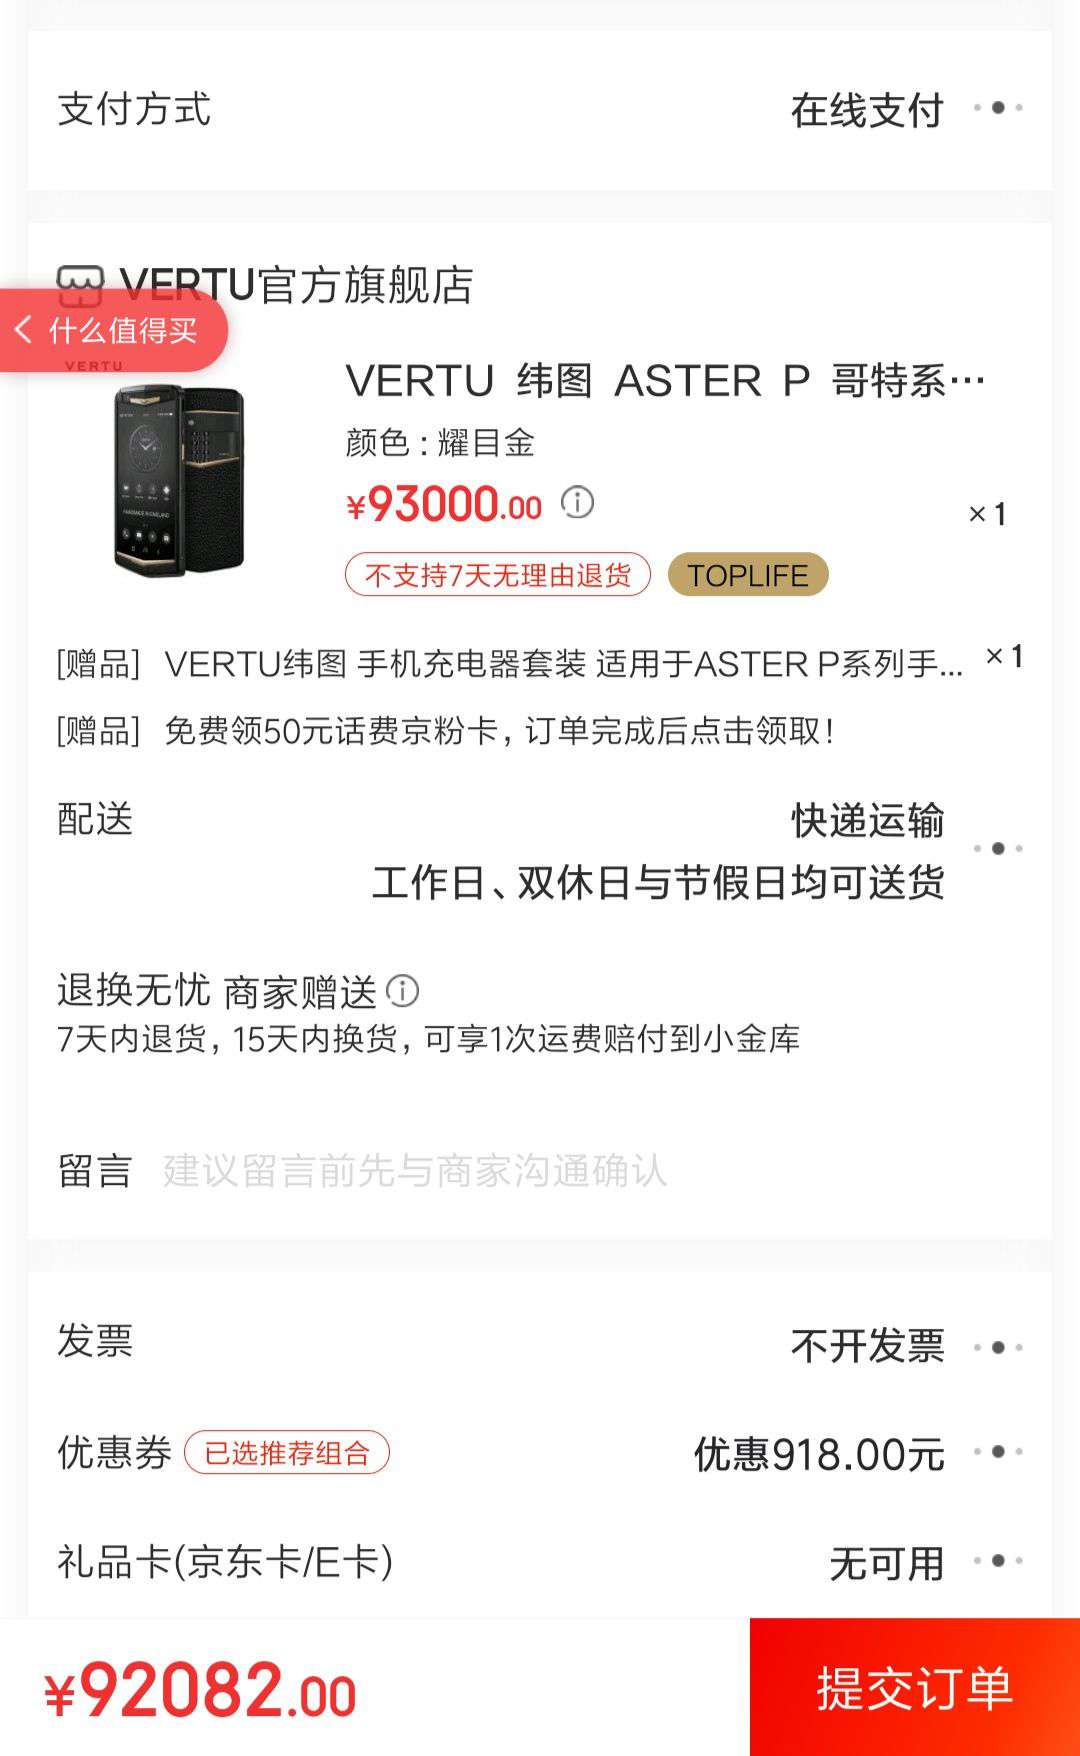 VERTU 纬图 ASTER P 哥特系列 商务智能手机 耀目金